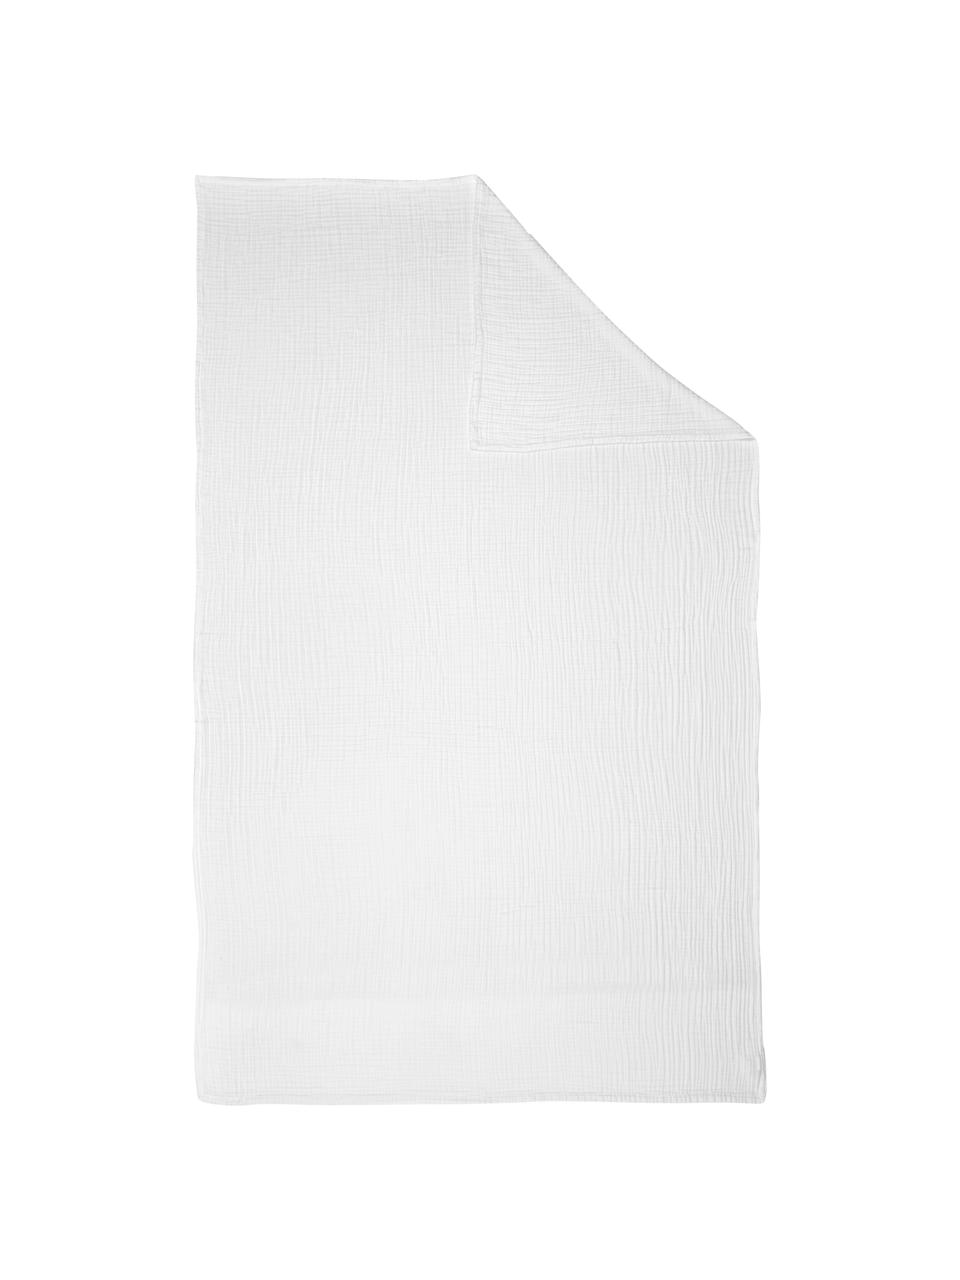 Colcha de algodón ecológico Candela, 100% algodón ecológico con certificado GOTS, Blanco, An 150 x L 250 cm (para camas de 100 x 200 cm)